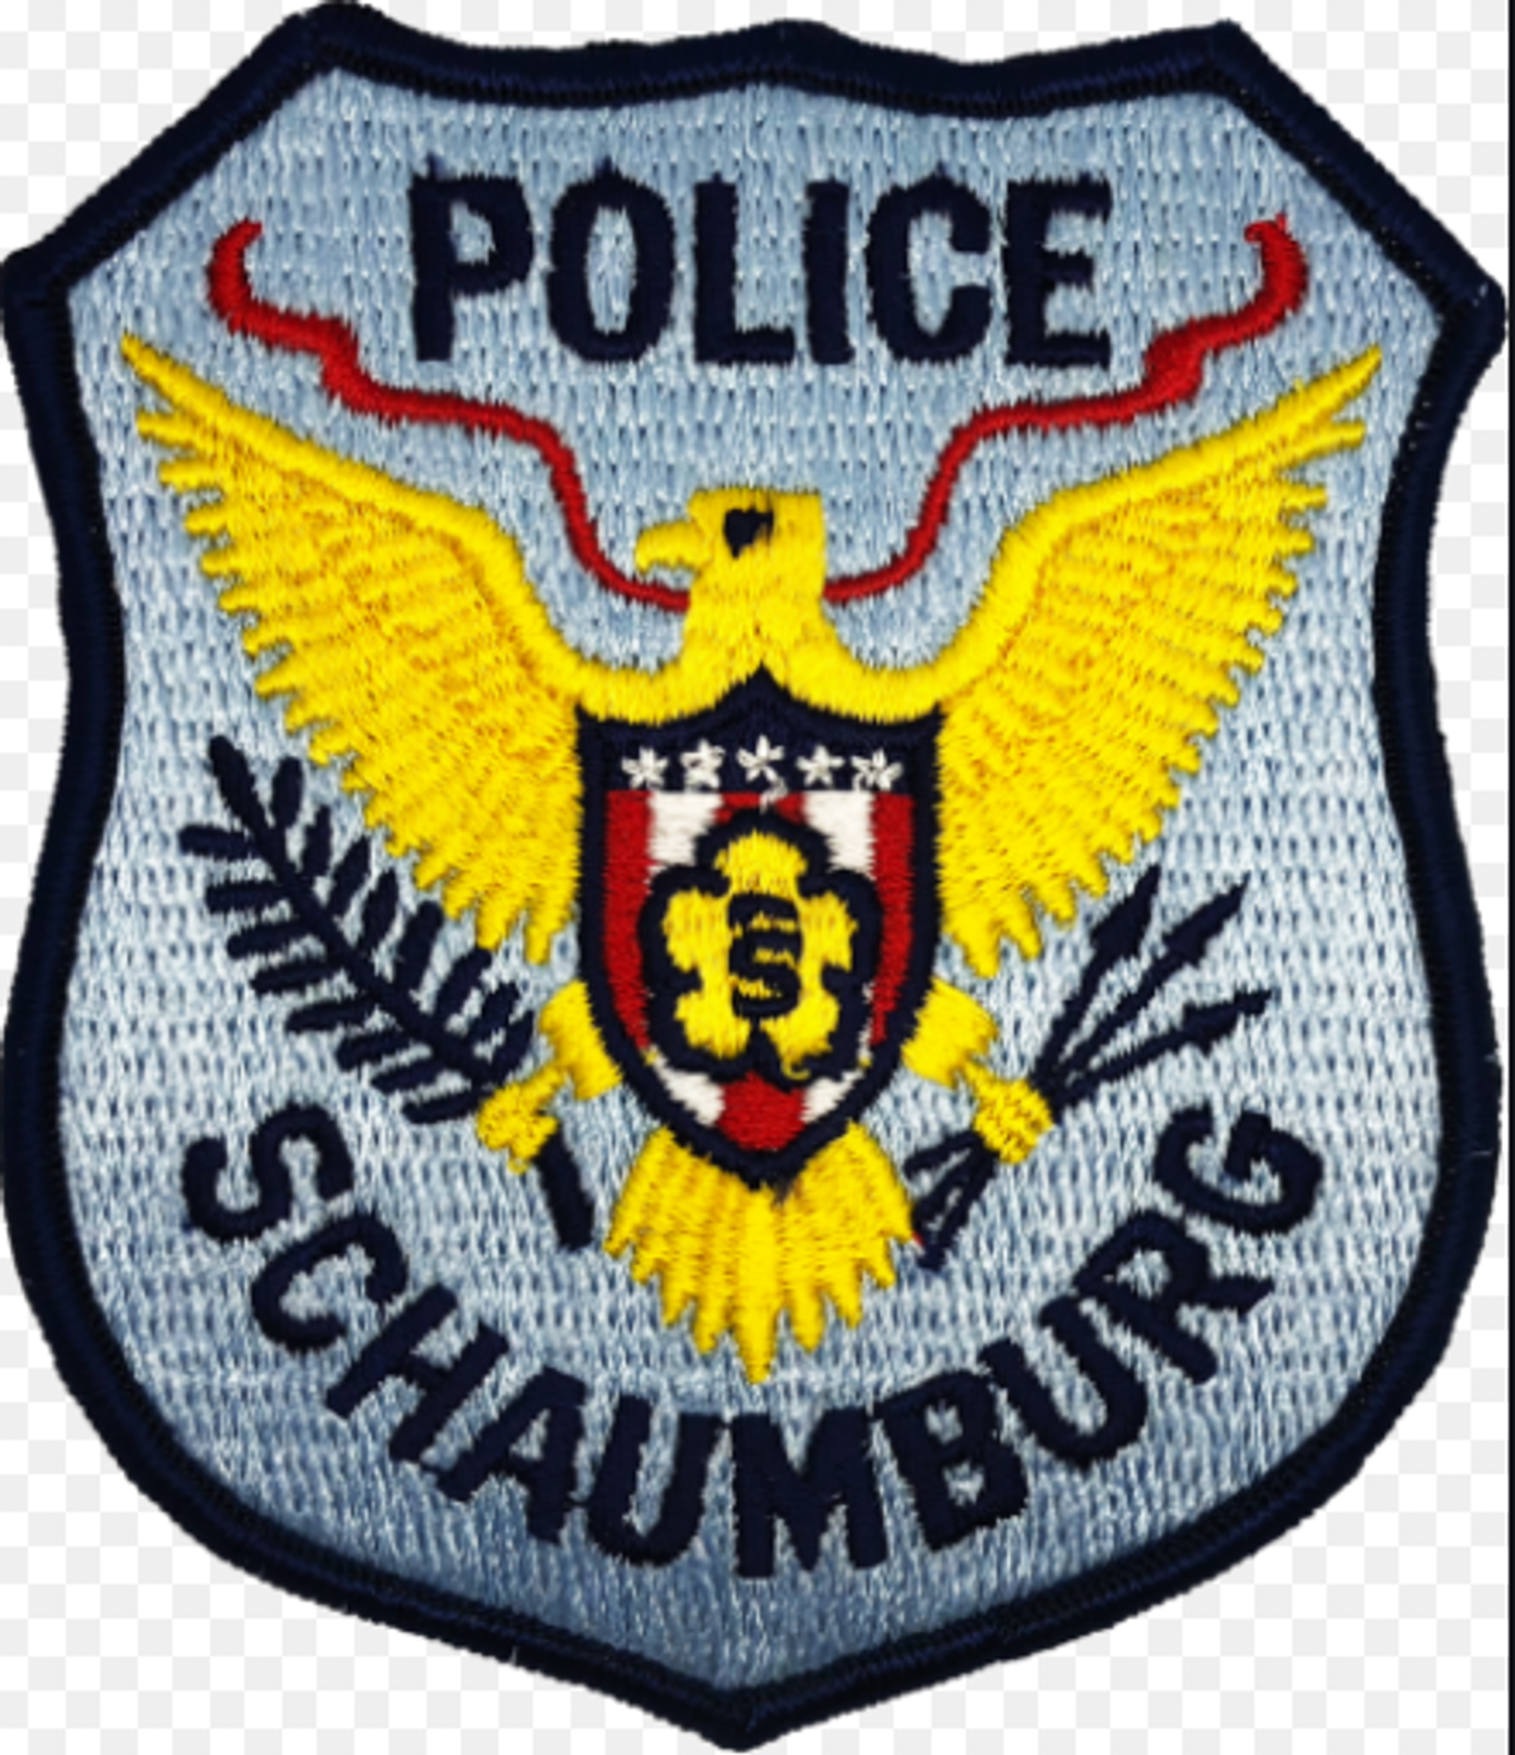 Schaumburg IL Police Patch